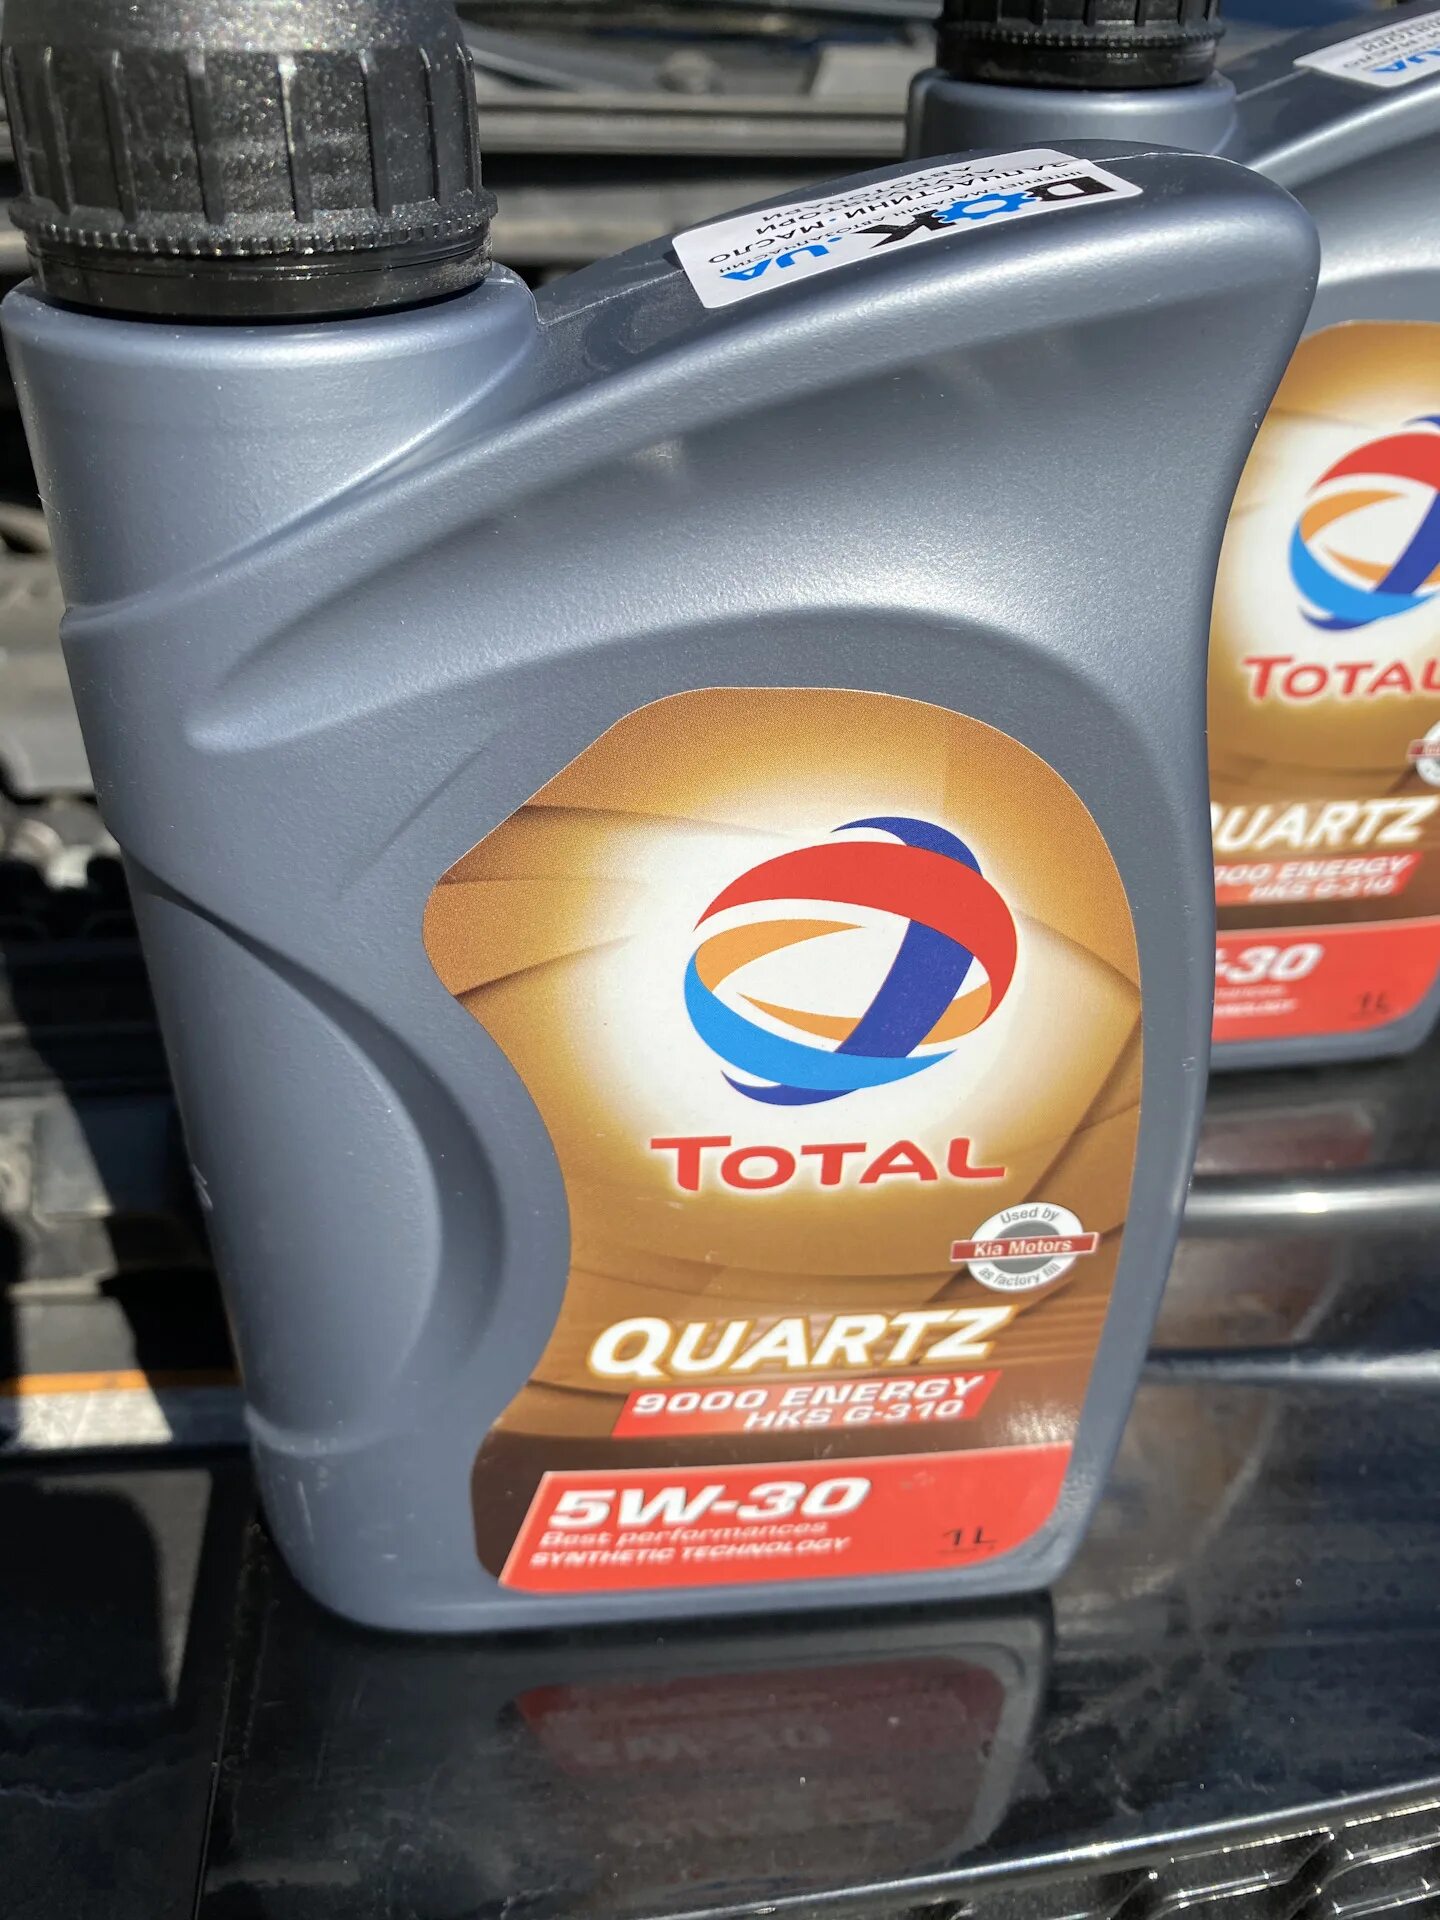 Моторное масло total quartz energy